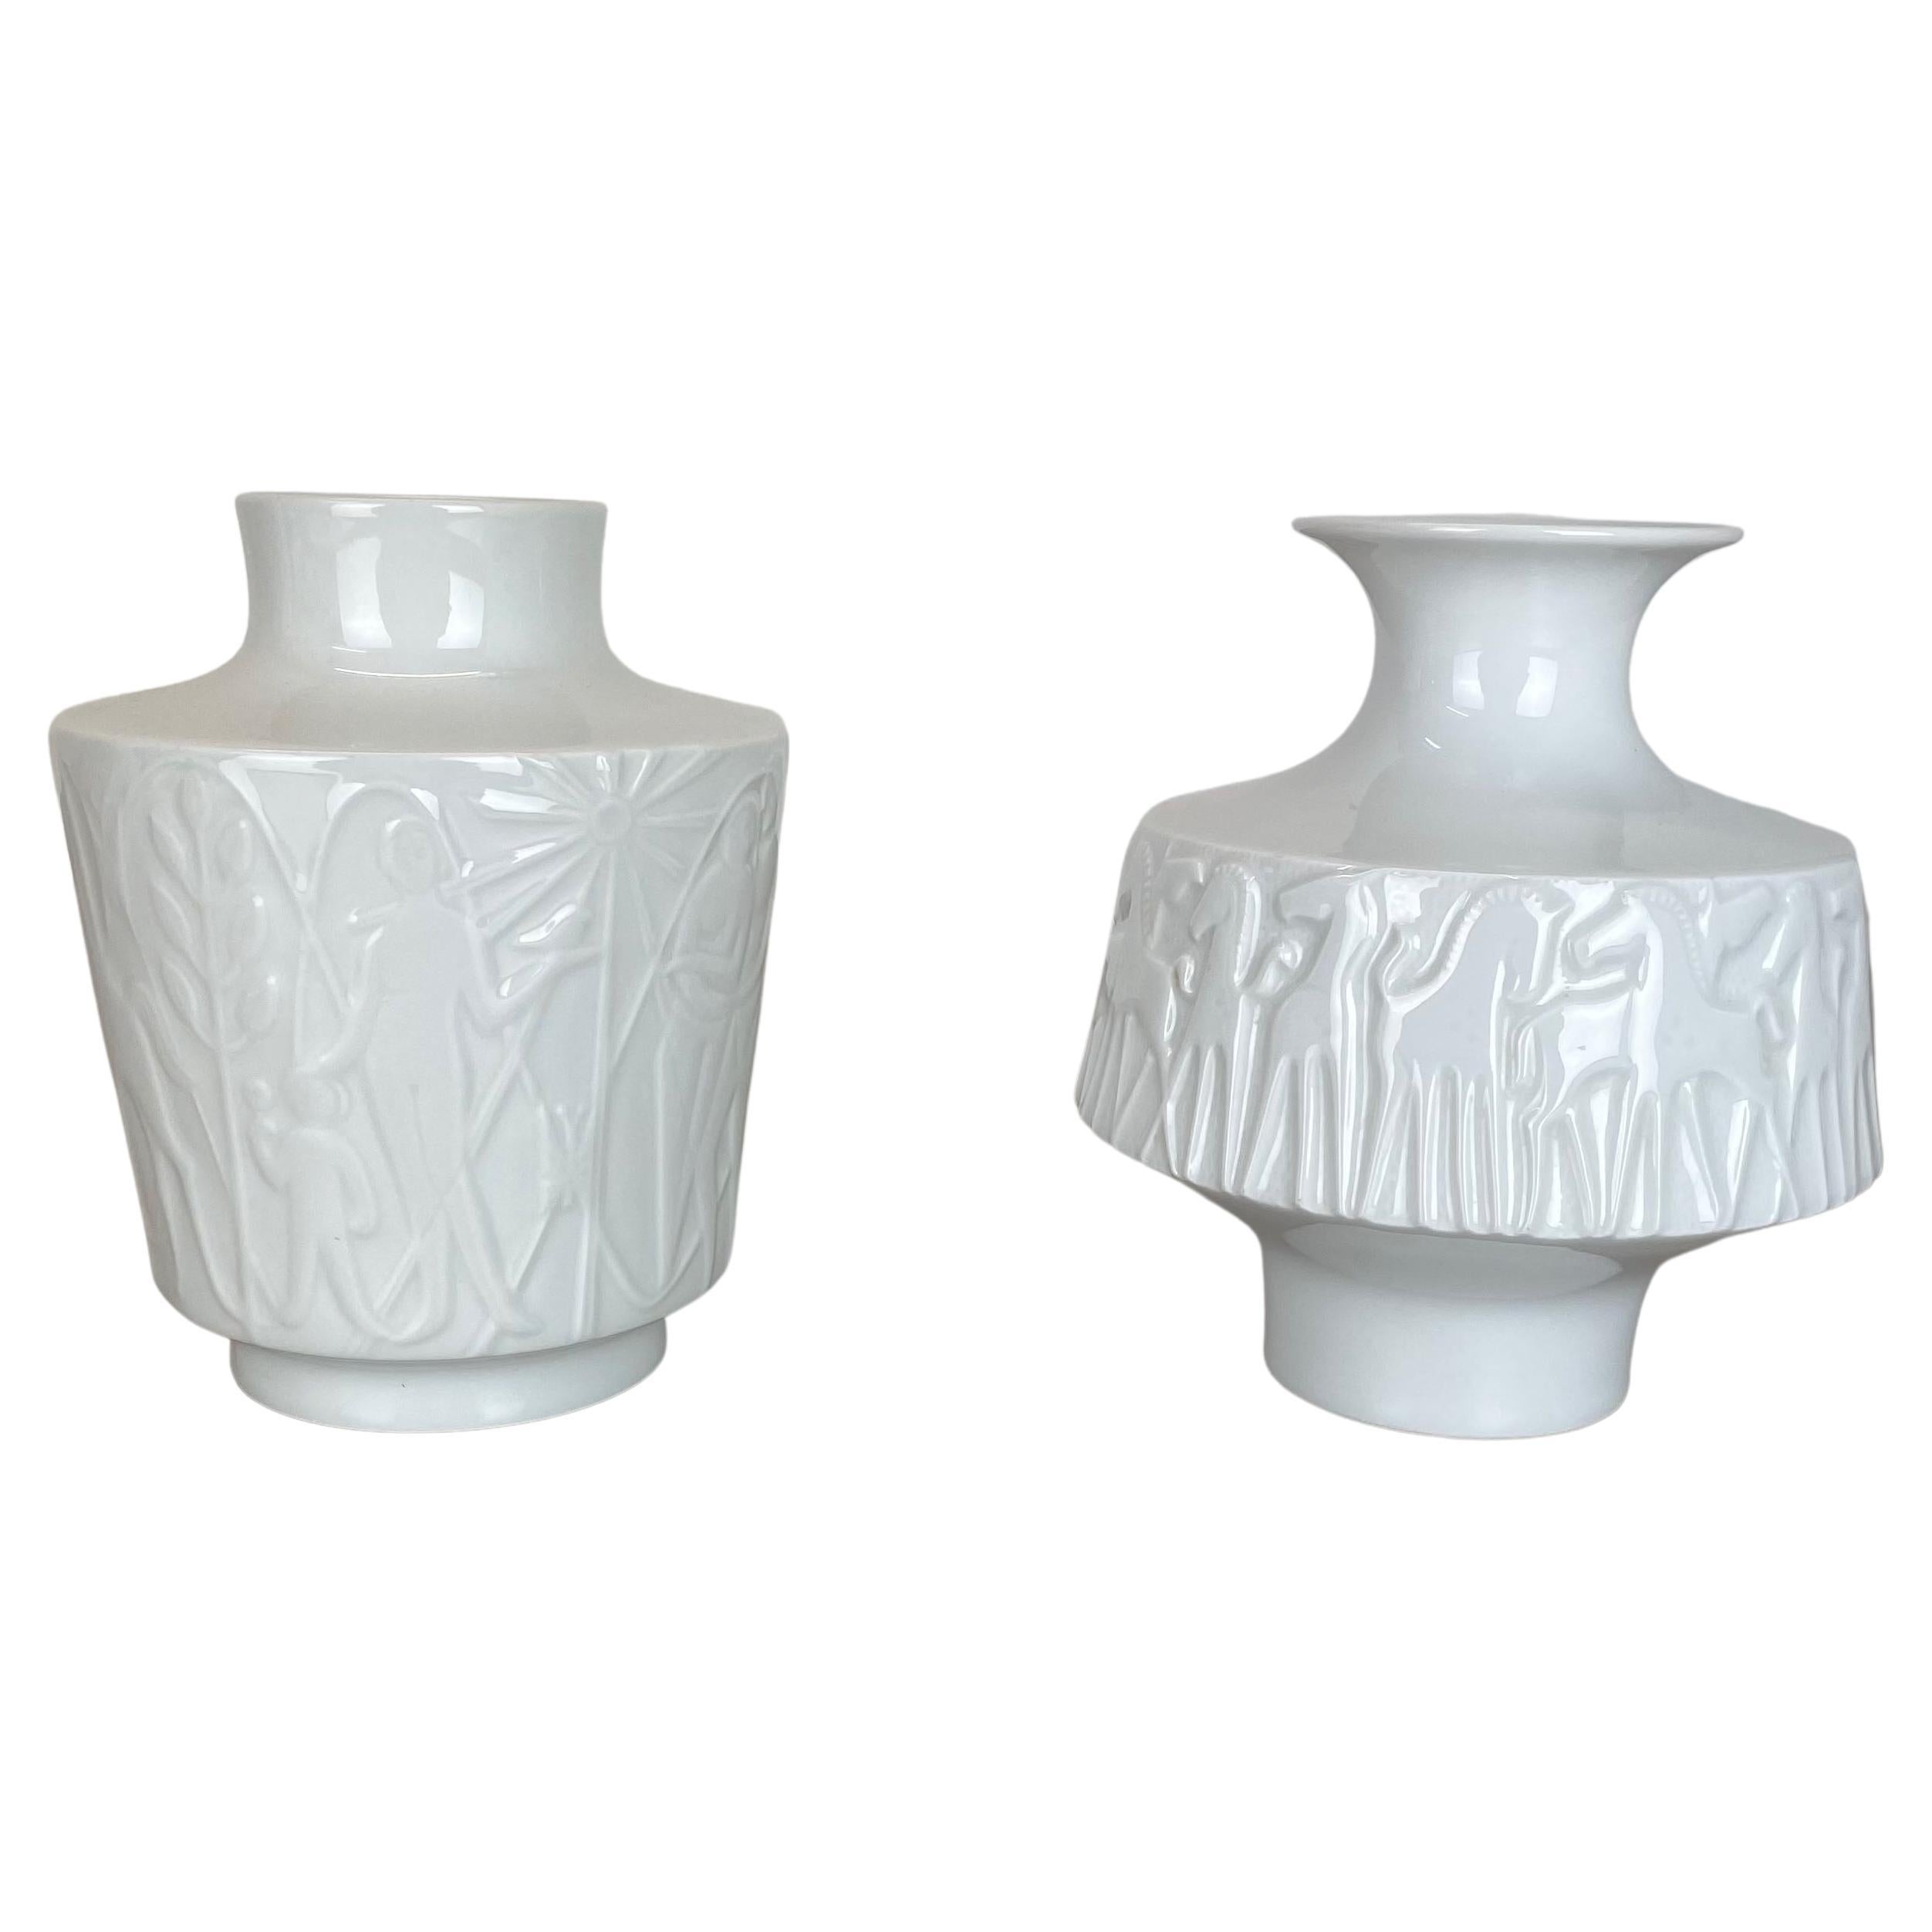 Set of 2 OP Art Biscuit Porcelain Vases by Edelstein Bavaria, Germany, 1970s For Sale